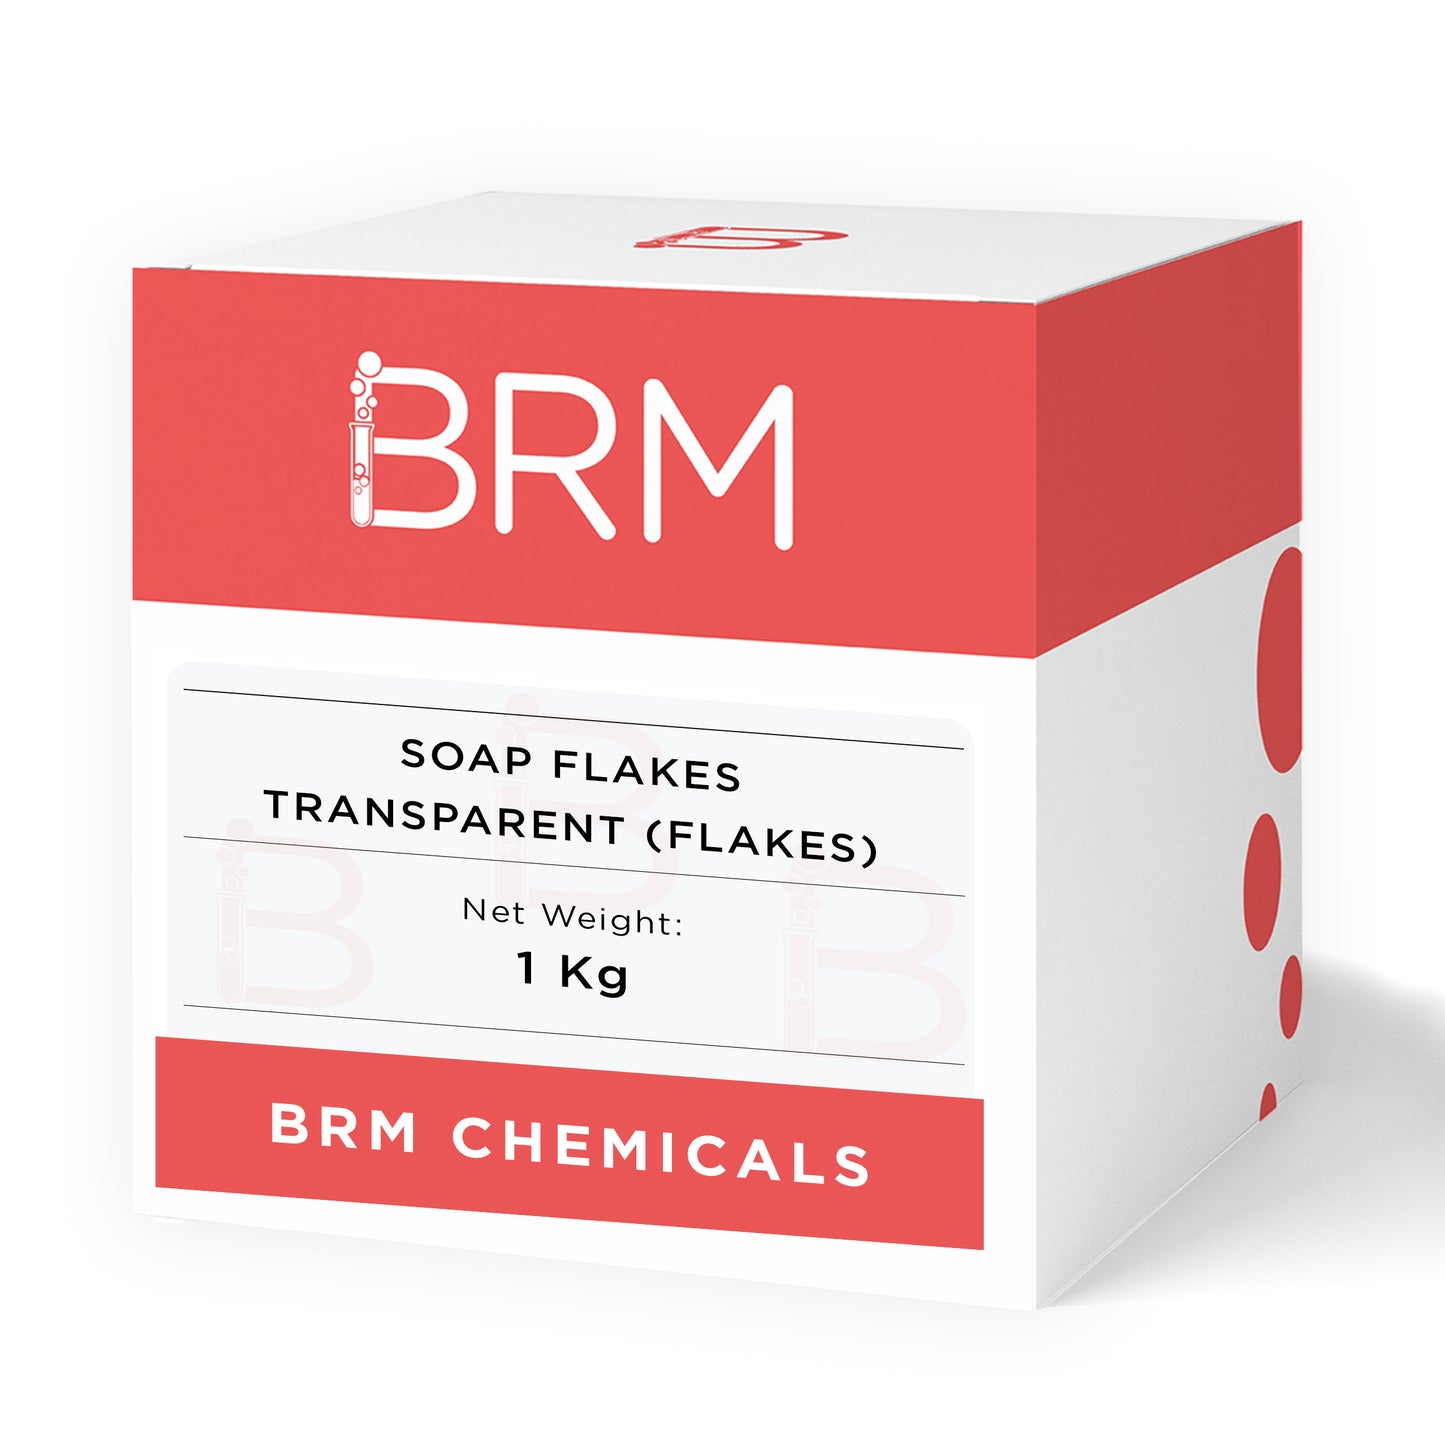 Soap Flakes Transparent (Flakes)